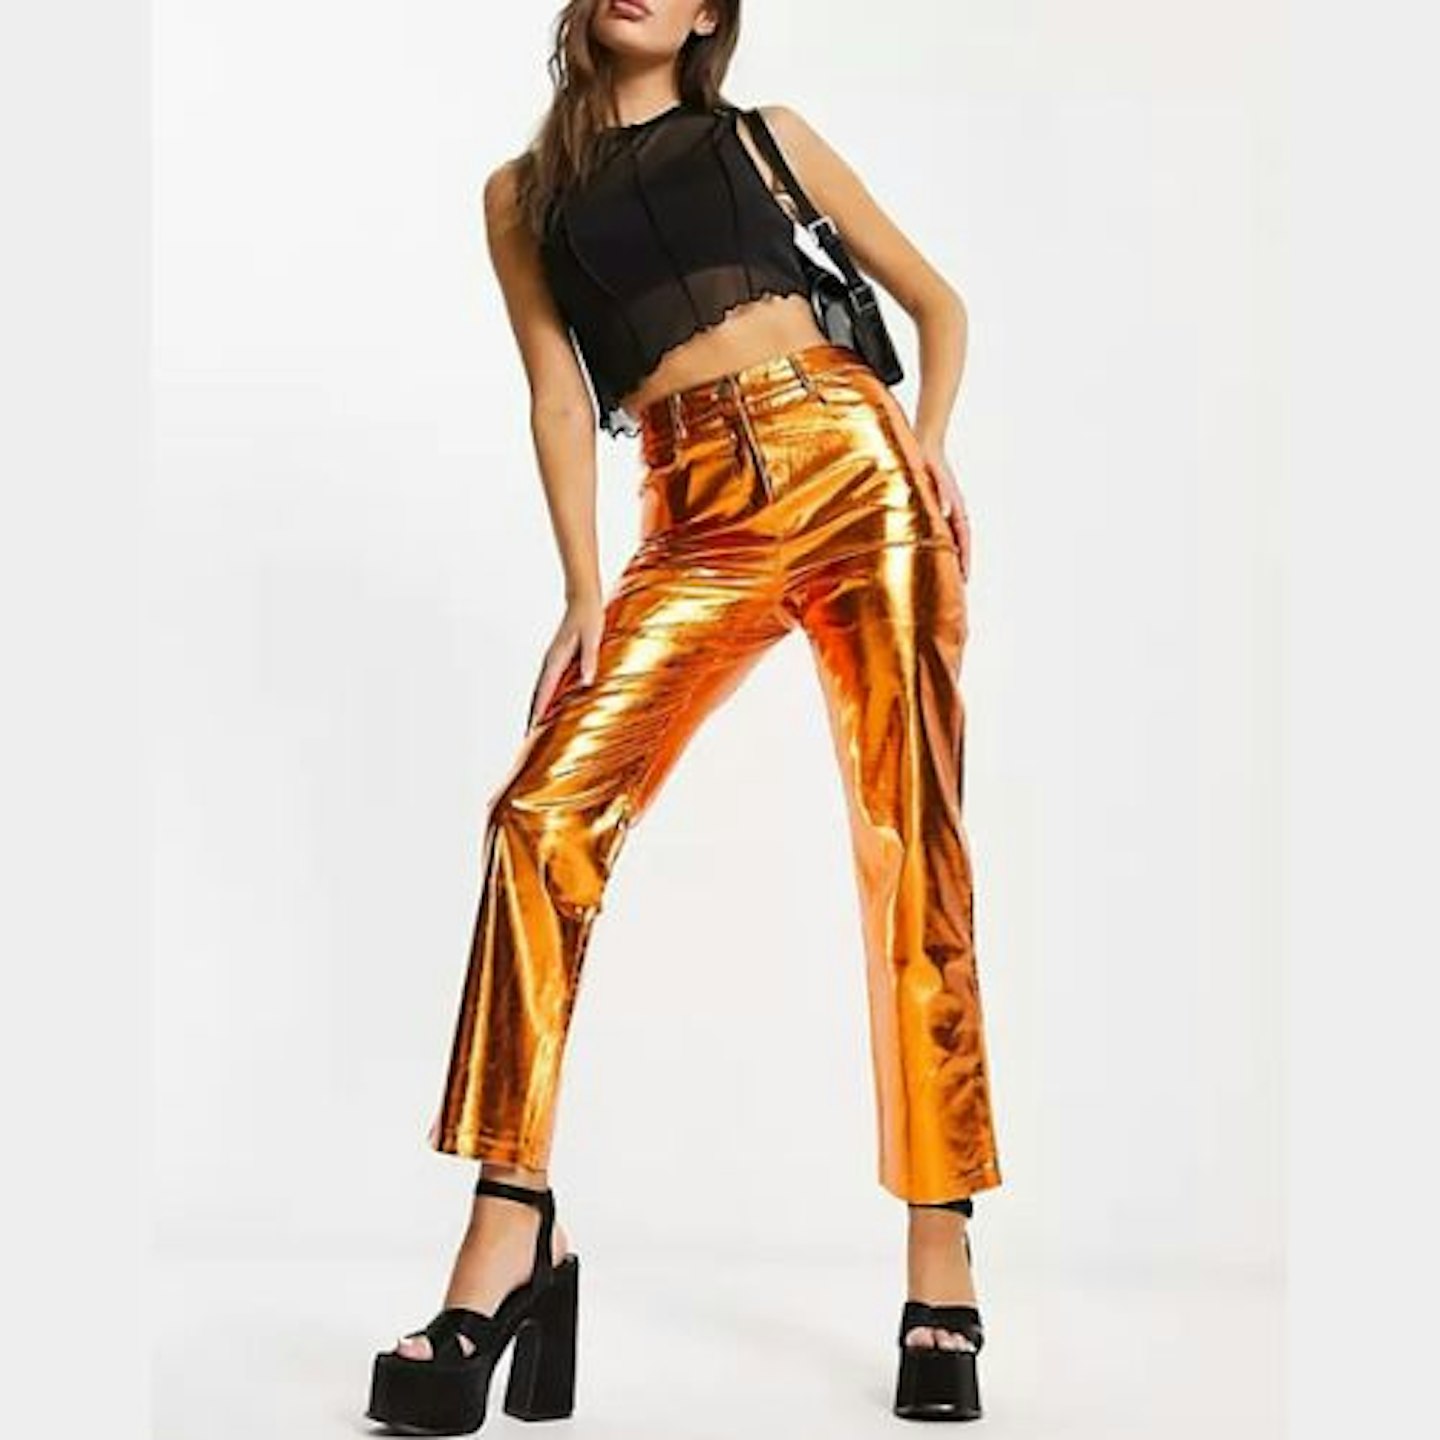 Amy Lynn Lupe Trouser in Metallic Orange